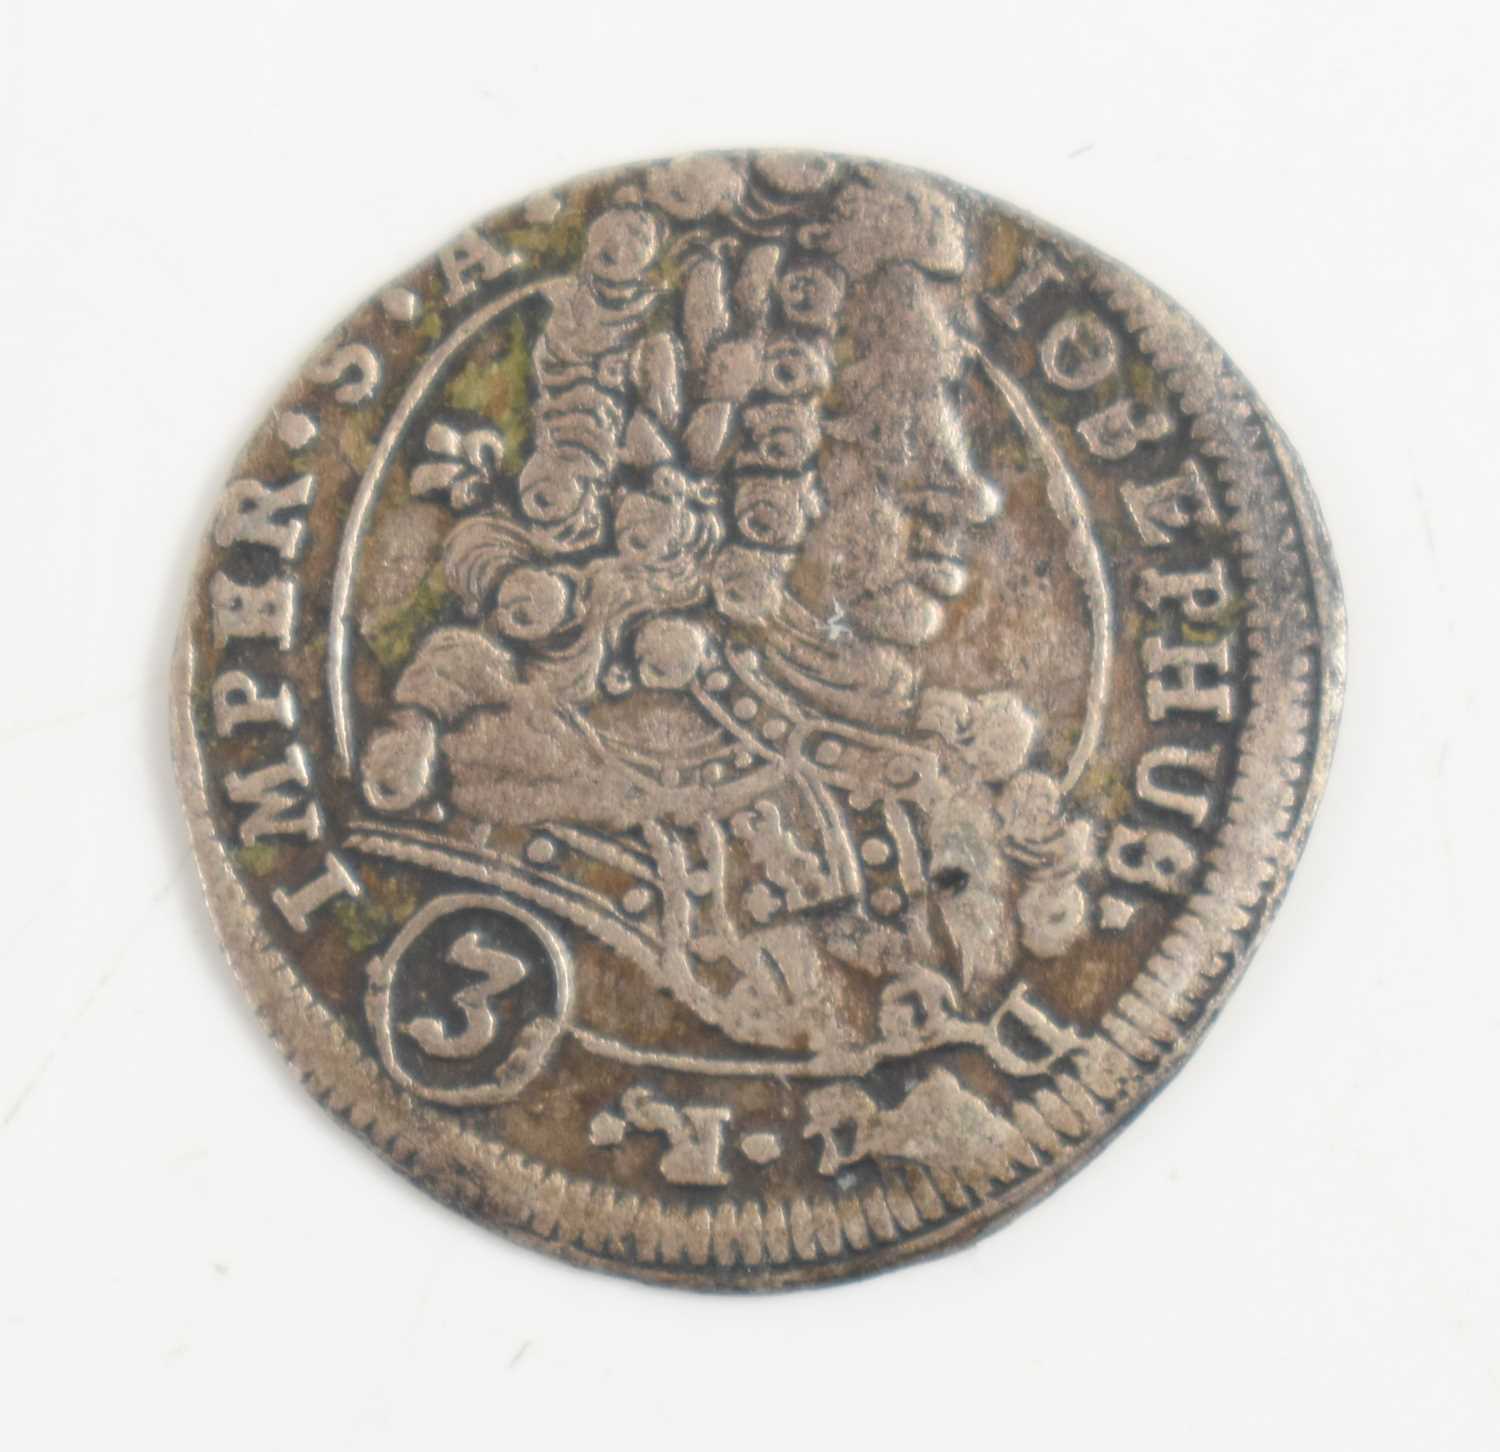 A Joseph I, 3 Kreuzer silver hammered coin, Bohemia Kingdom, dated 1710.